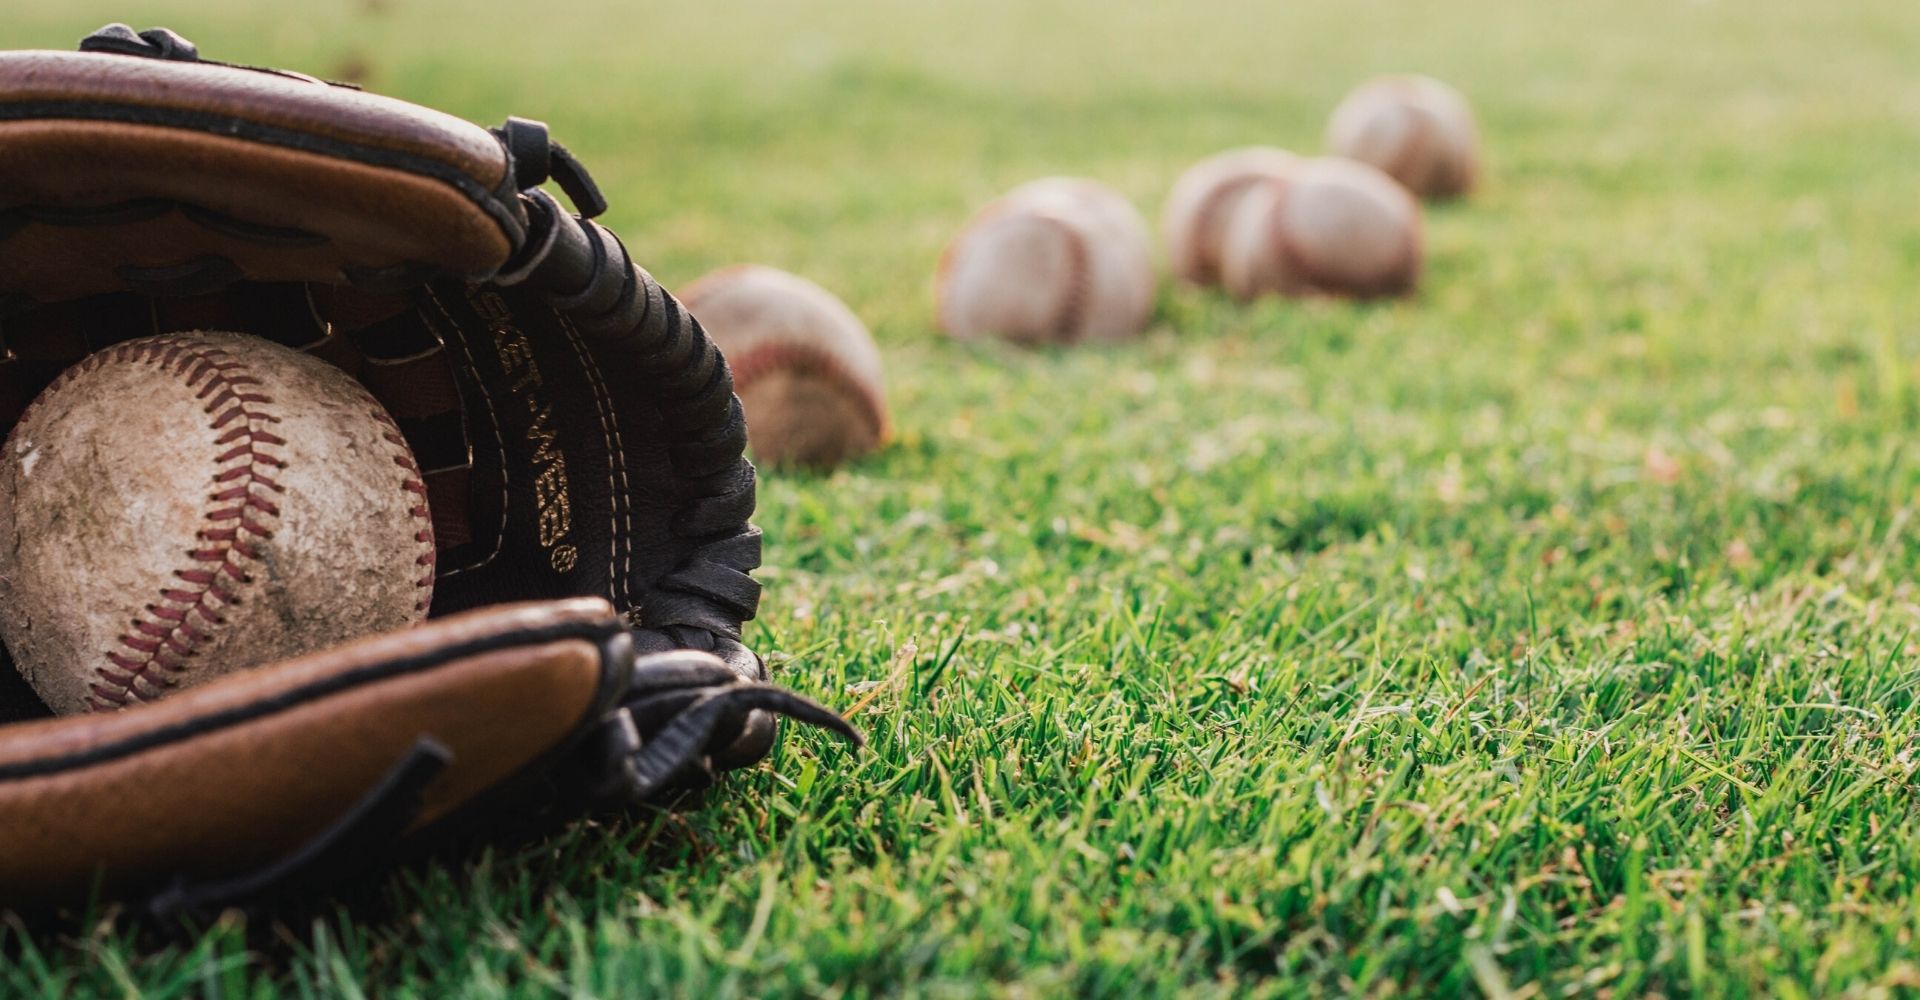 baseball glove on field with multiple baseballs